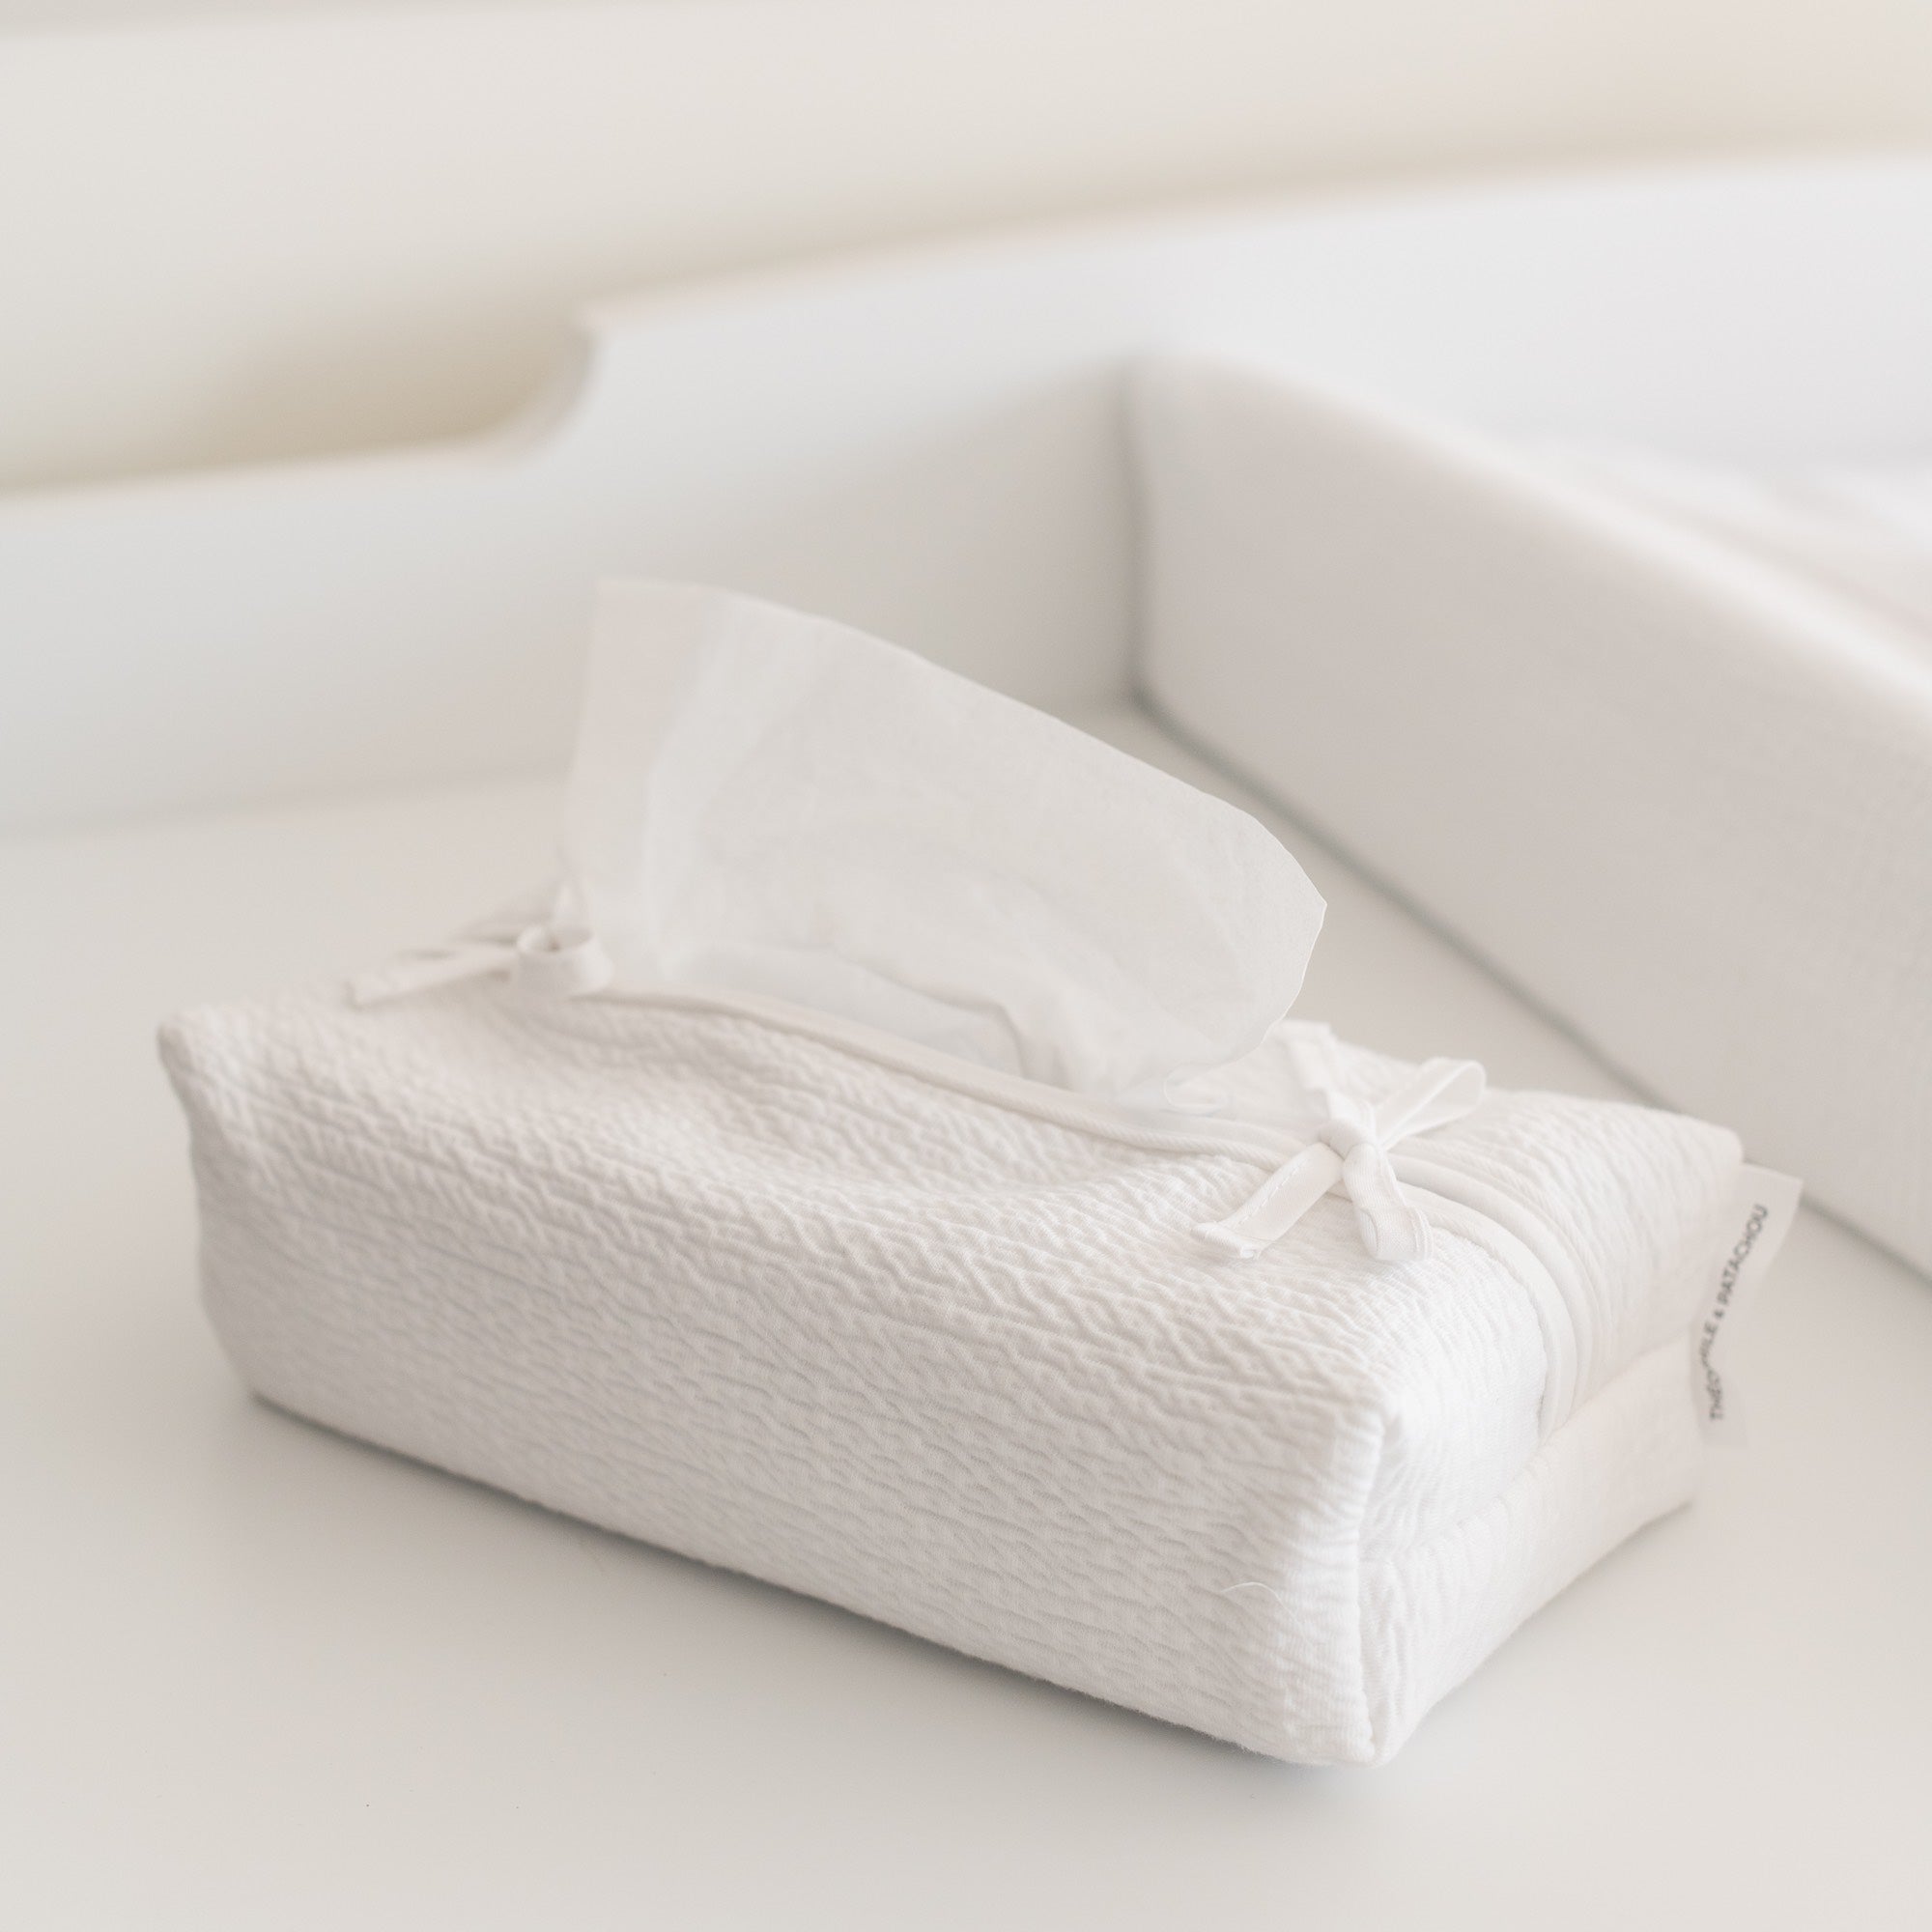 Theophile & Patachou Tissue Box Cover - Cotton White